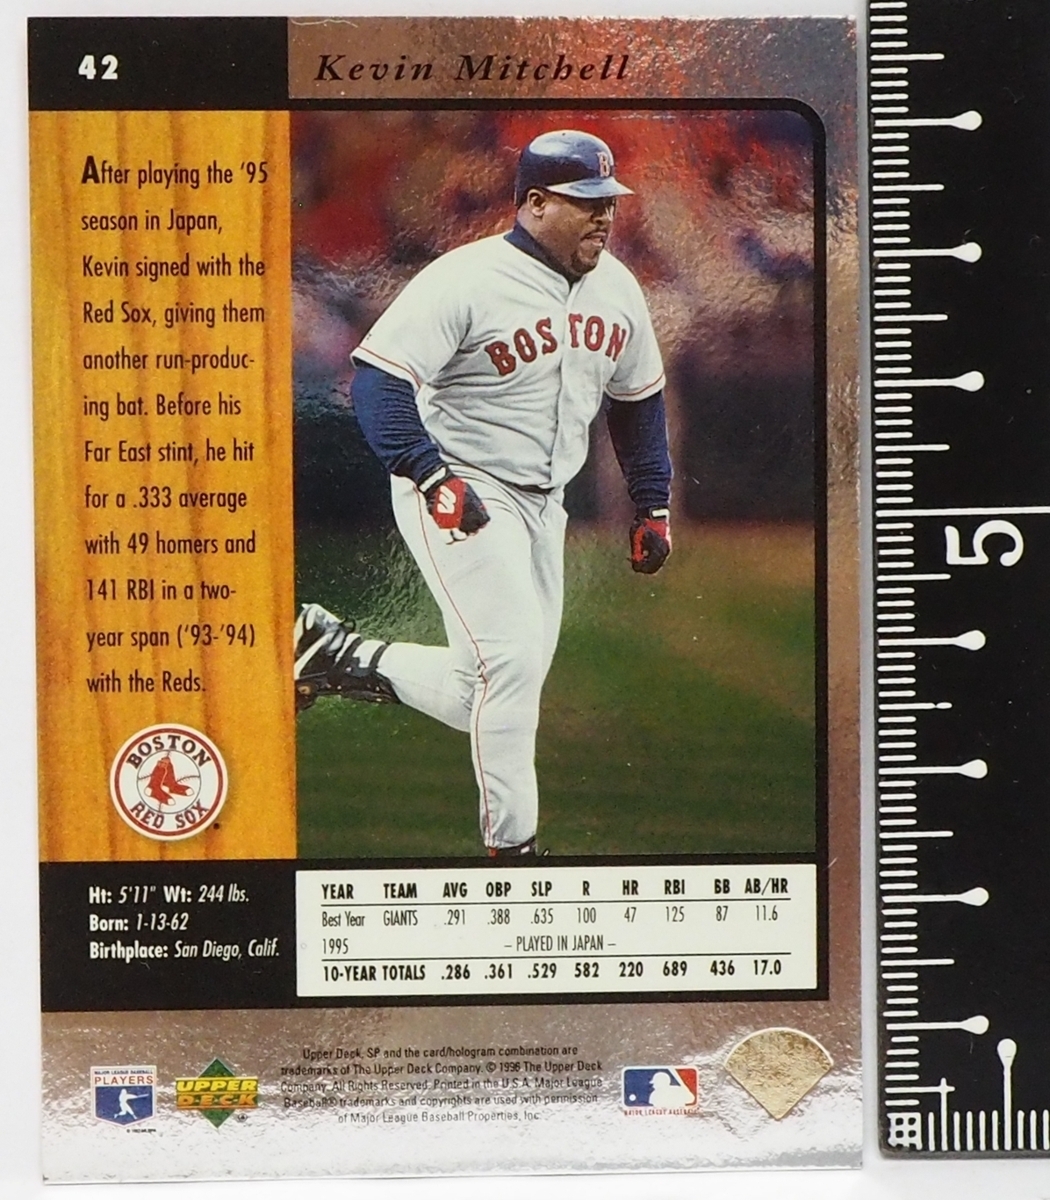 1996 Upper Deck SP #42【Kevin Mitchell(Red Sox)】96年MLBメジャーリーグ野球カードBaseball CARDアッパーデック ベースボール【送料込】_画像2